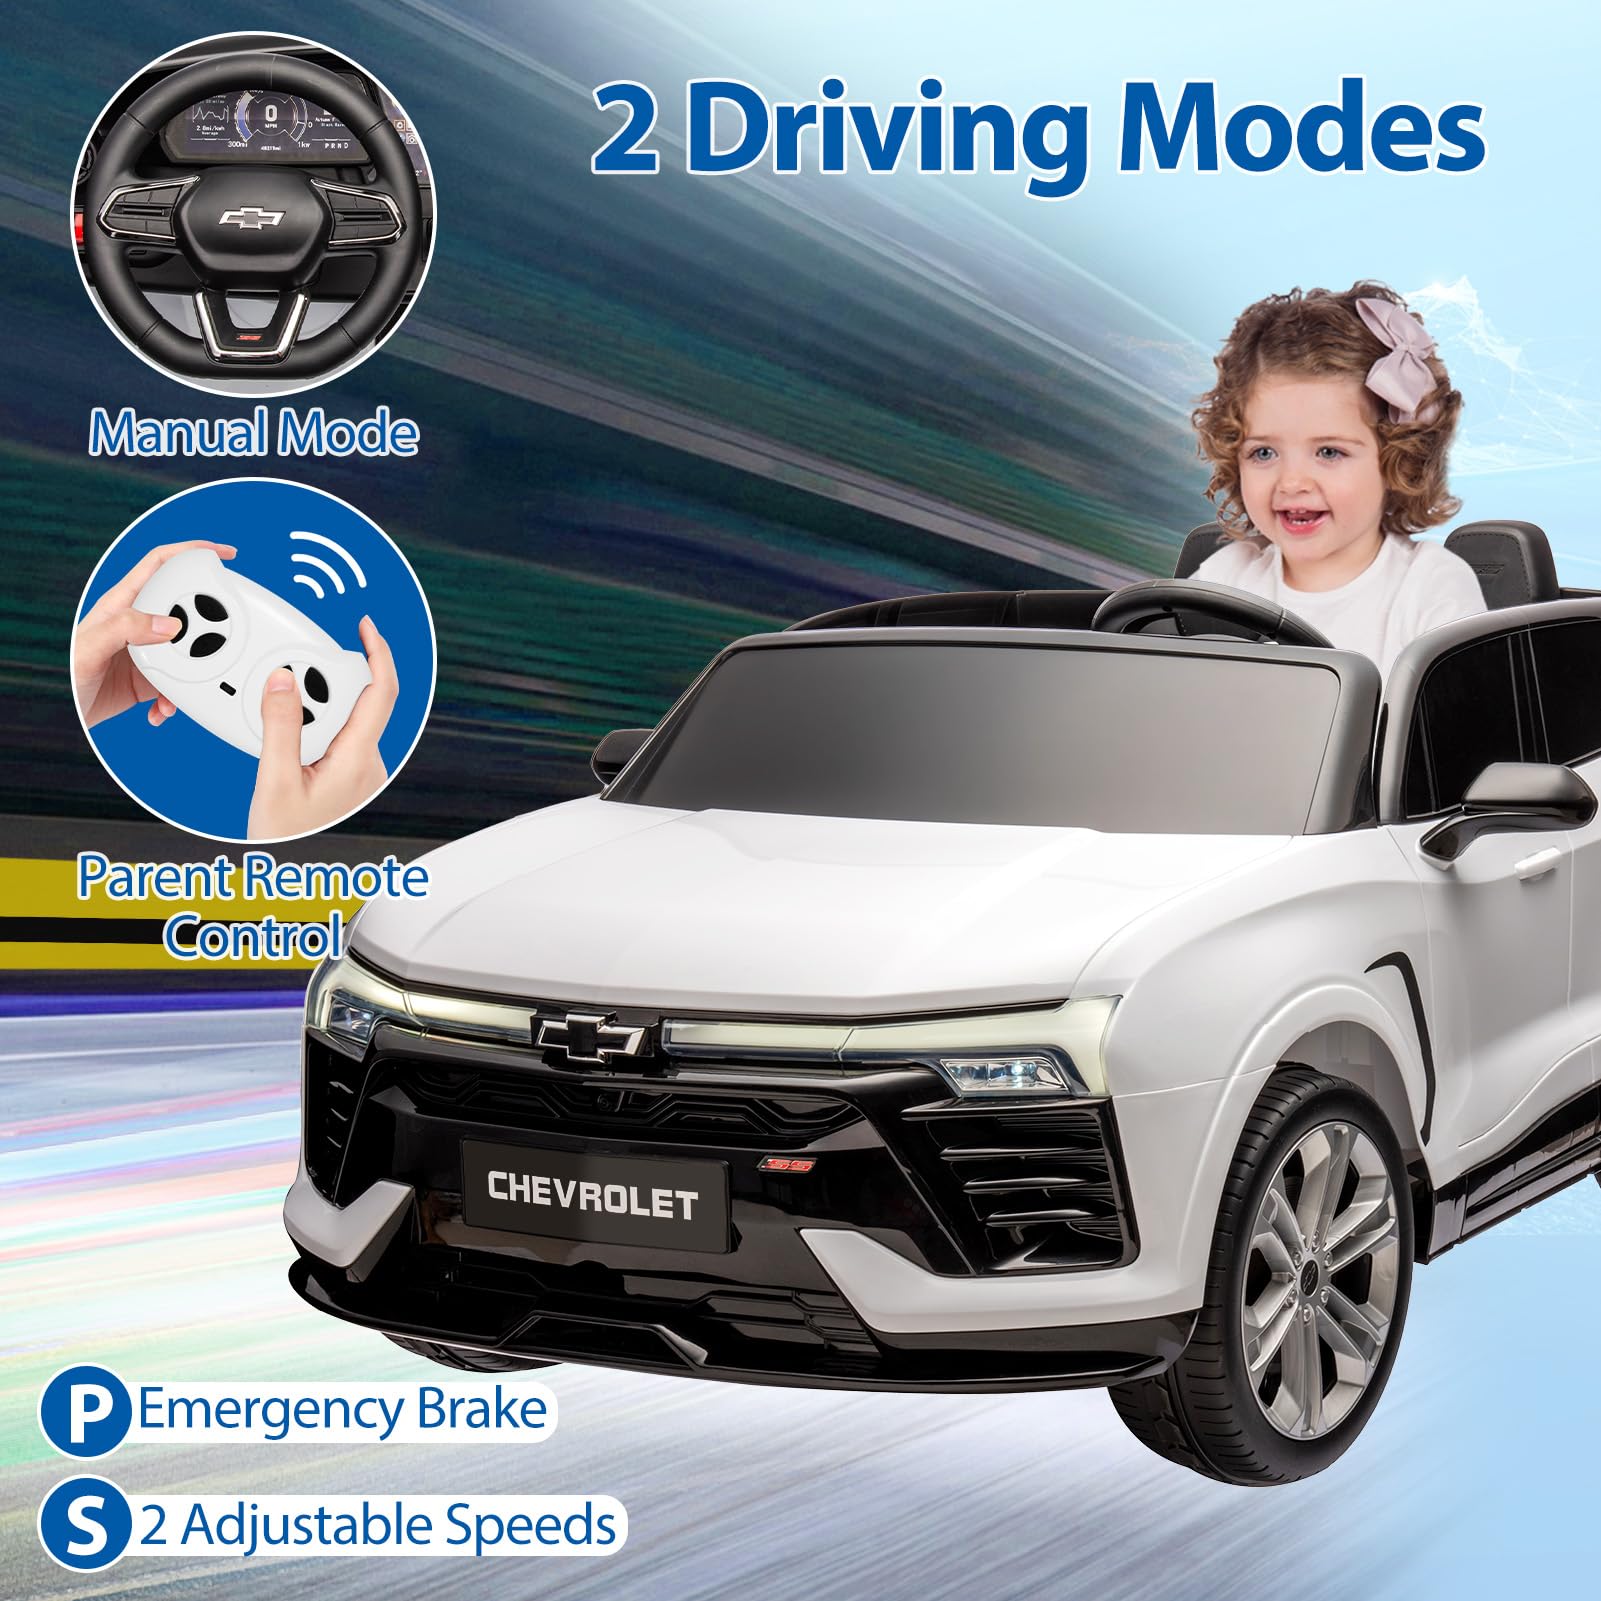 24V 2-Seater Chevrolet Blazer Kids Car with Remote Control, Bluetooth